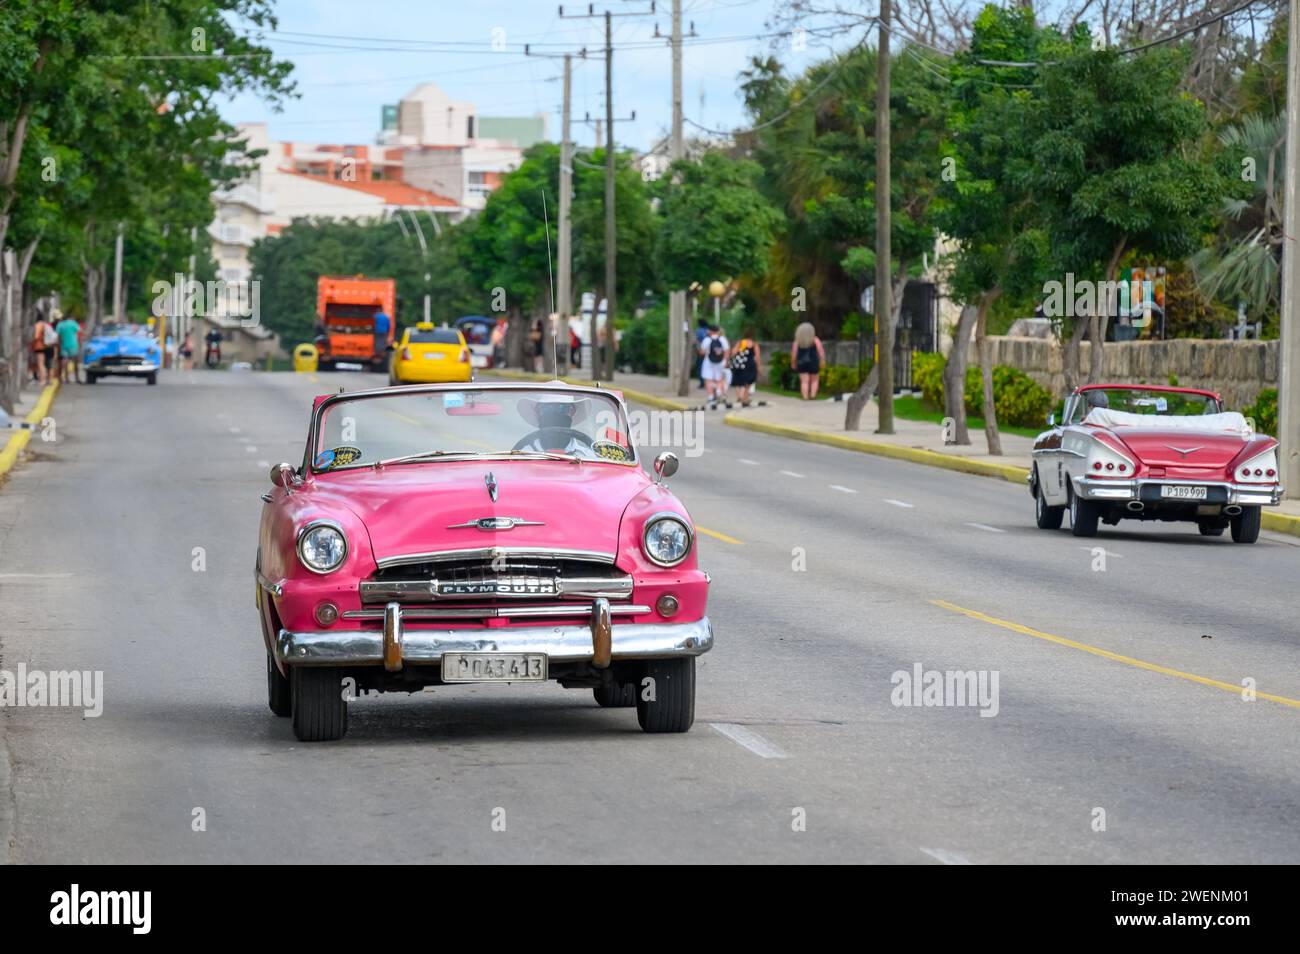 Car vintage American old vehicle, Varadero, Cuba Stock Photo